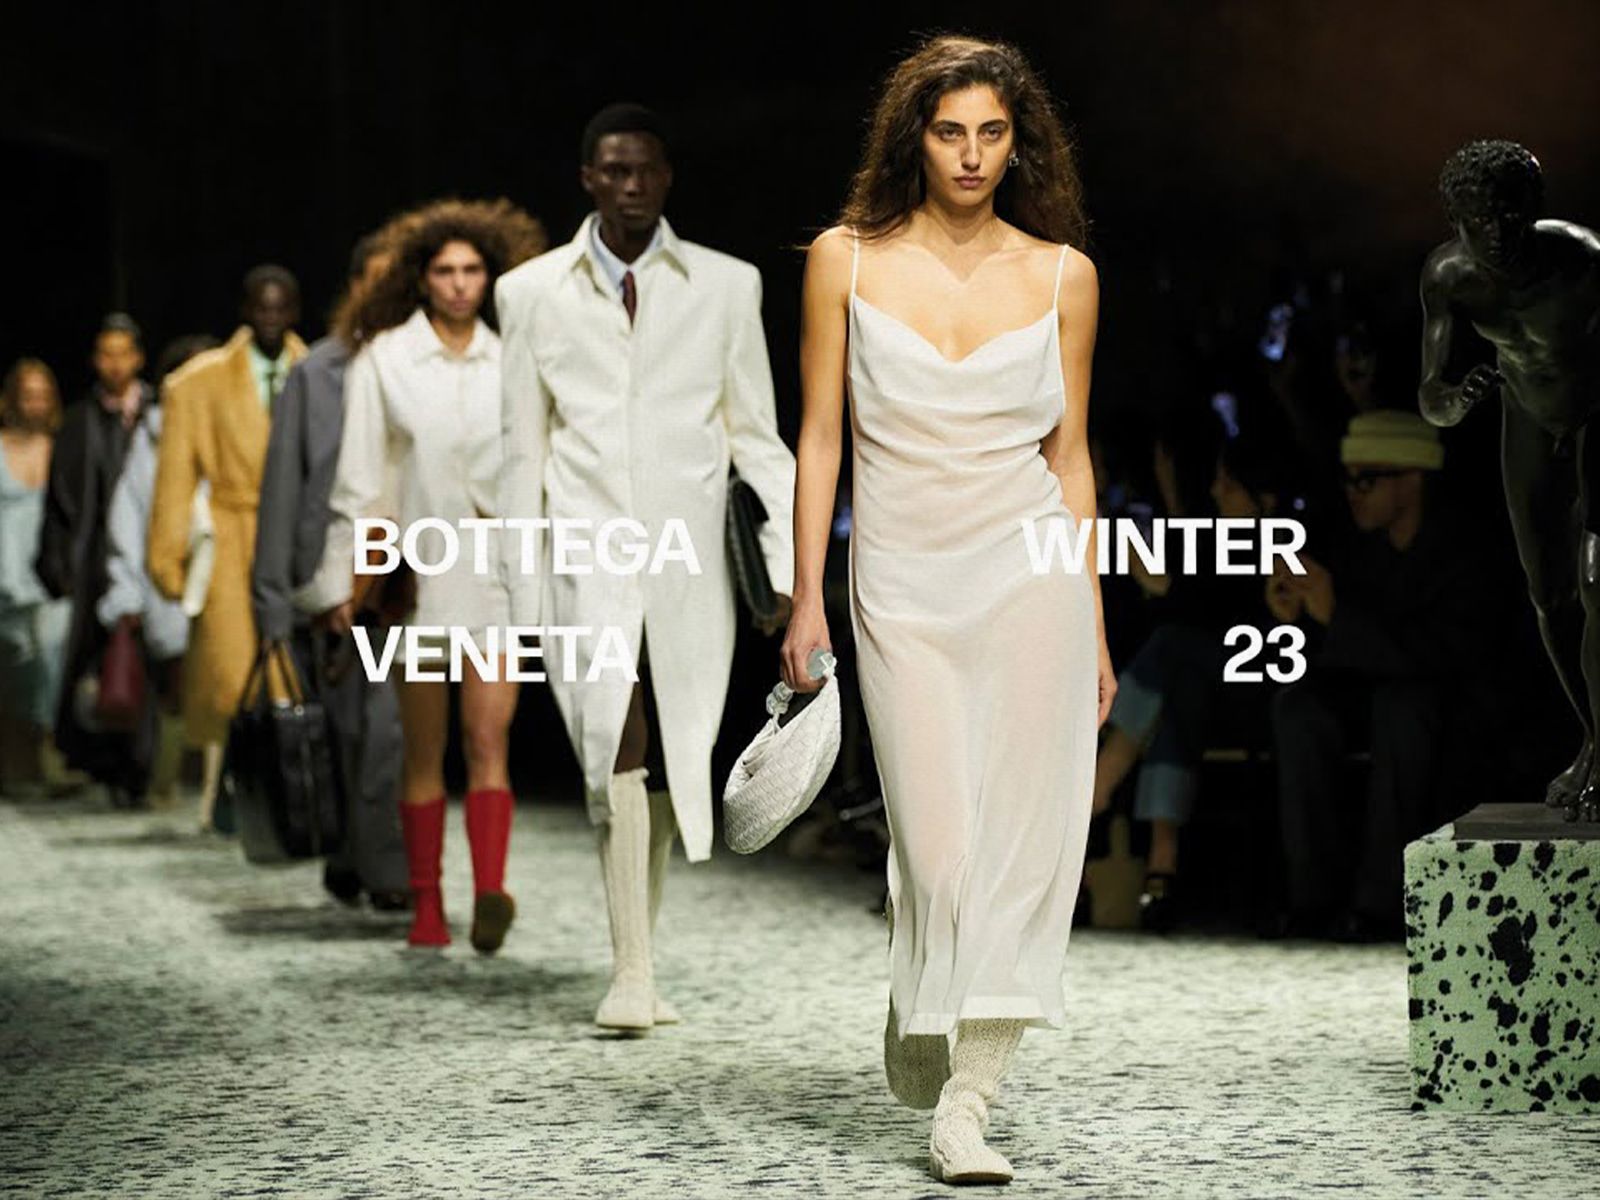 Bottega Veneta to hold its next fashion show in Beijing